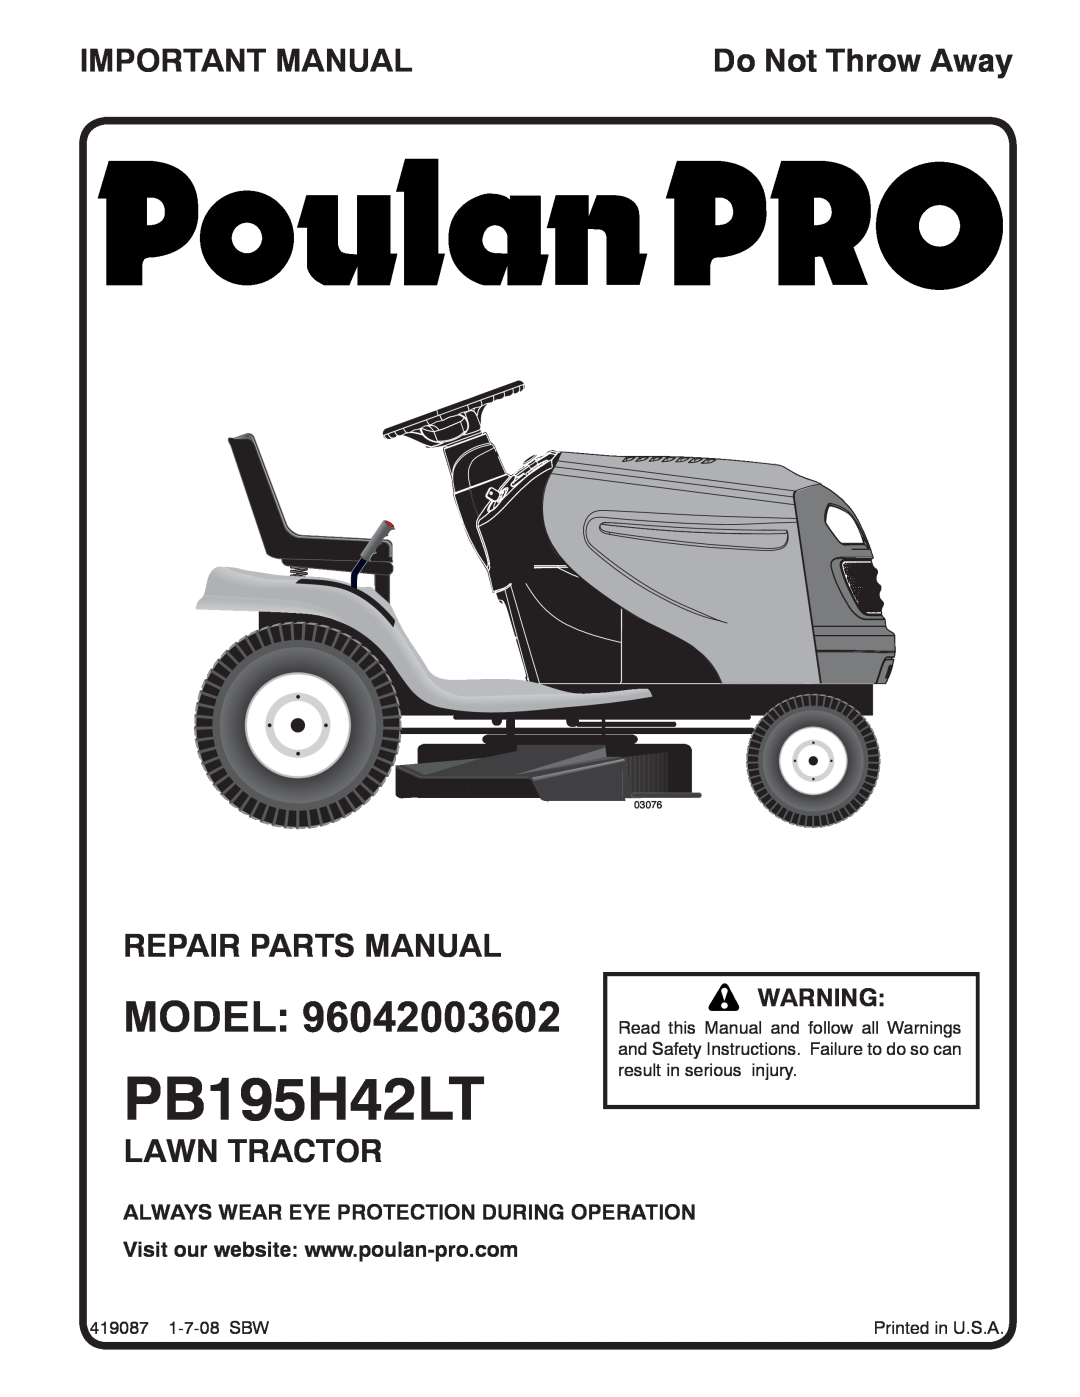 Poulan 96042003602 manual Important Manual, Repair Parts Manual, Lawn Tractor, PB195H42LT, Model, Do Not Throw Away, 03076 